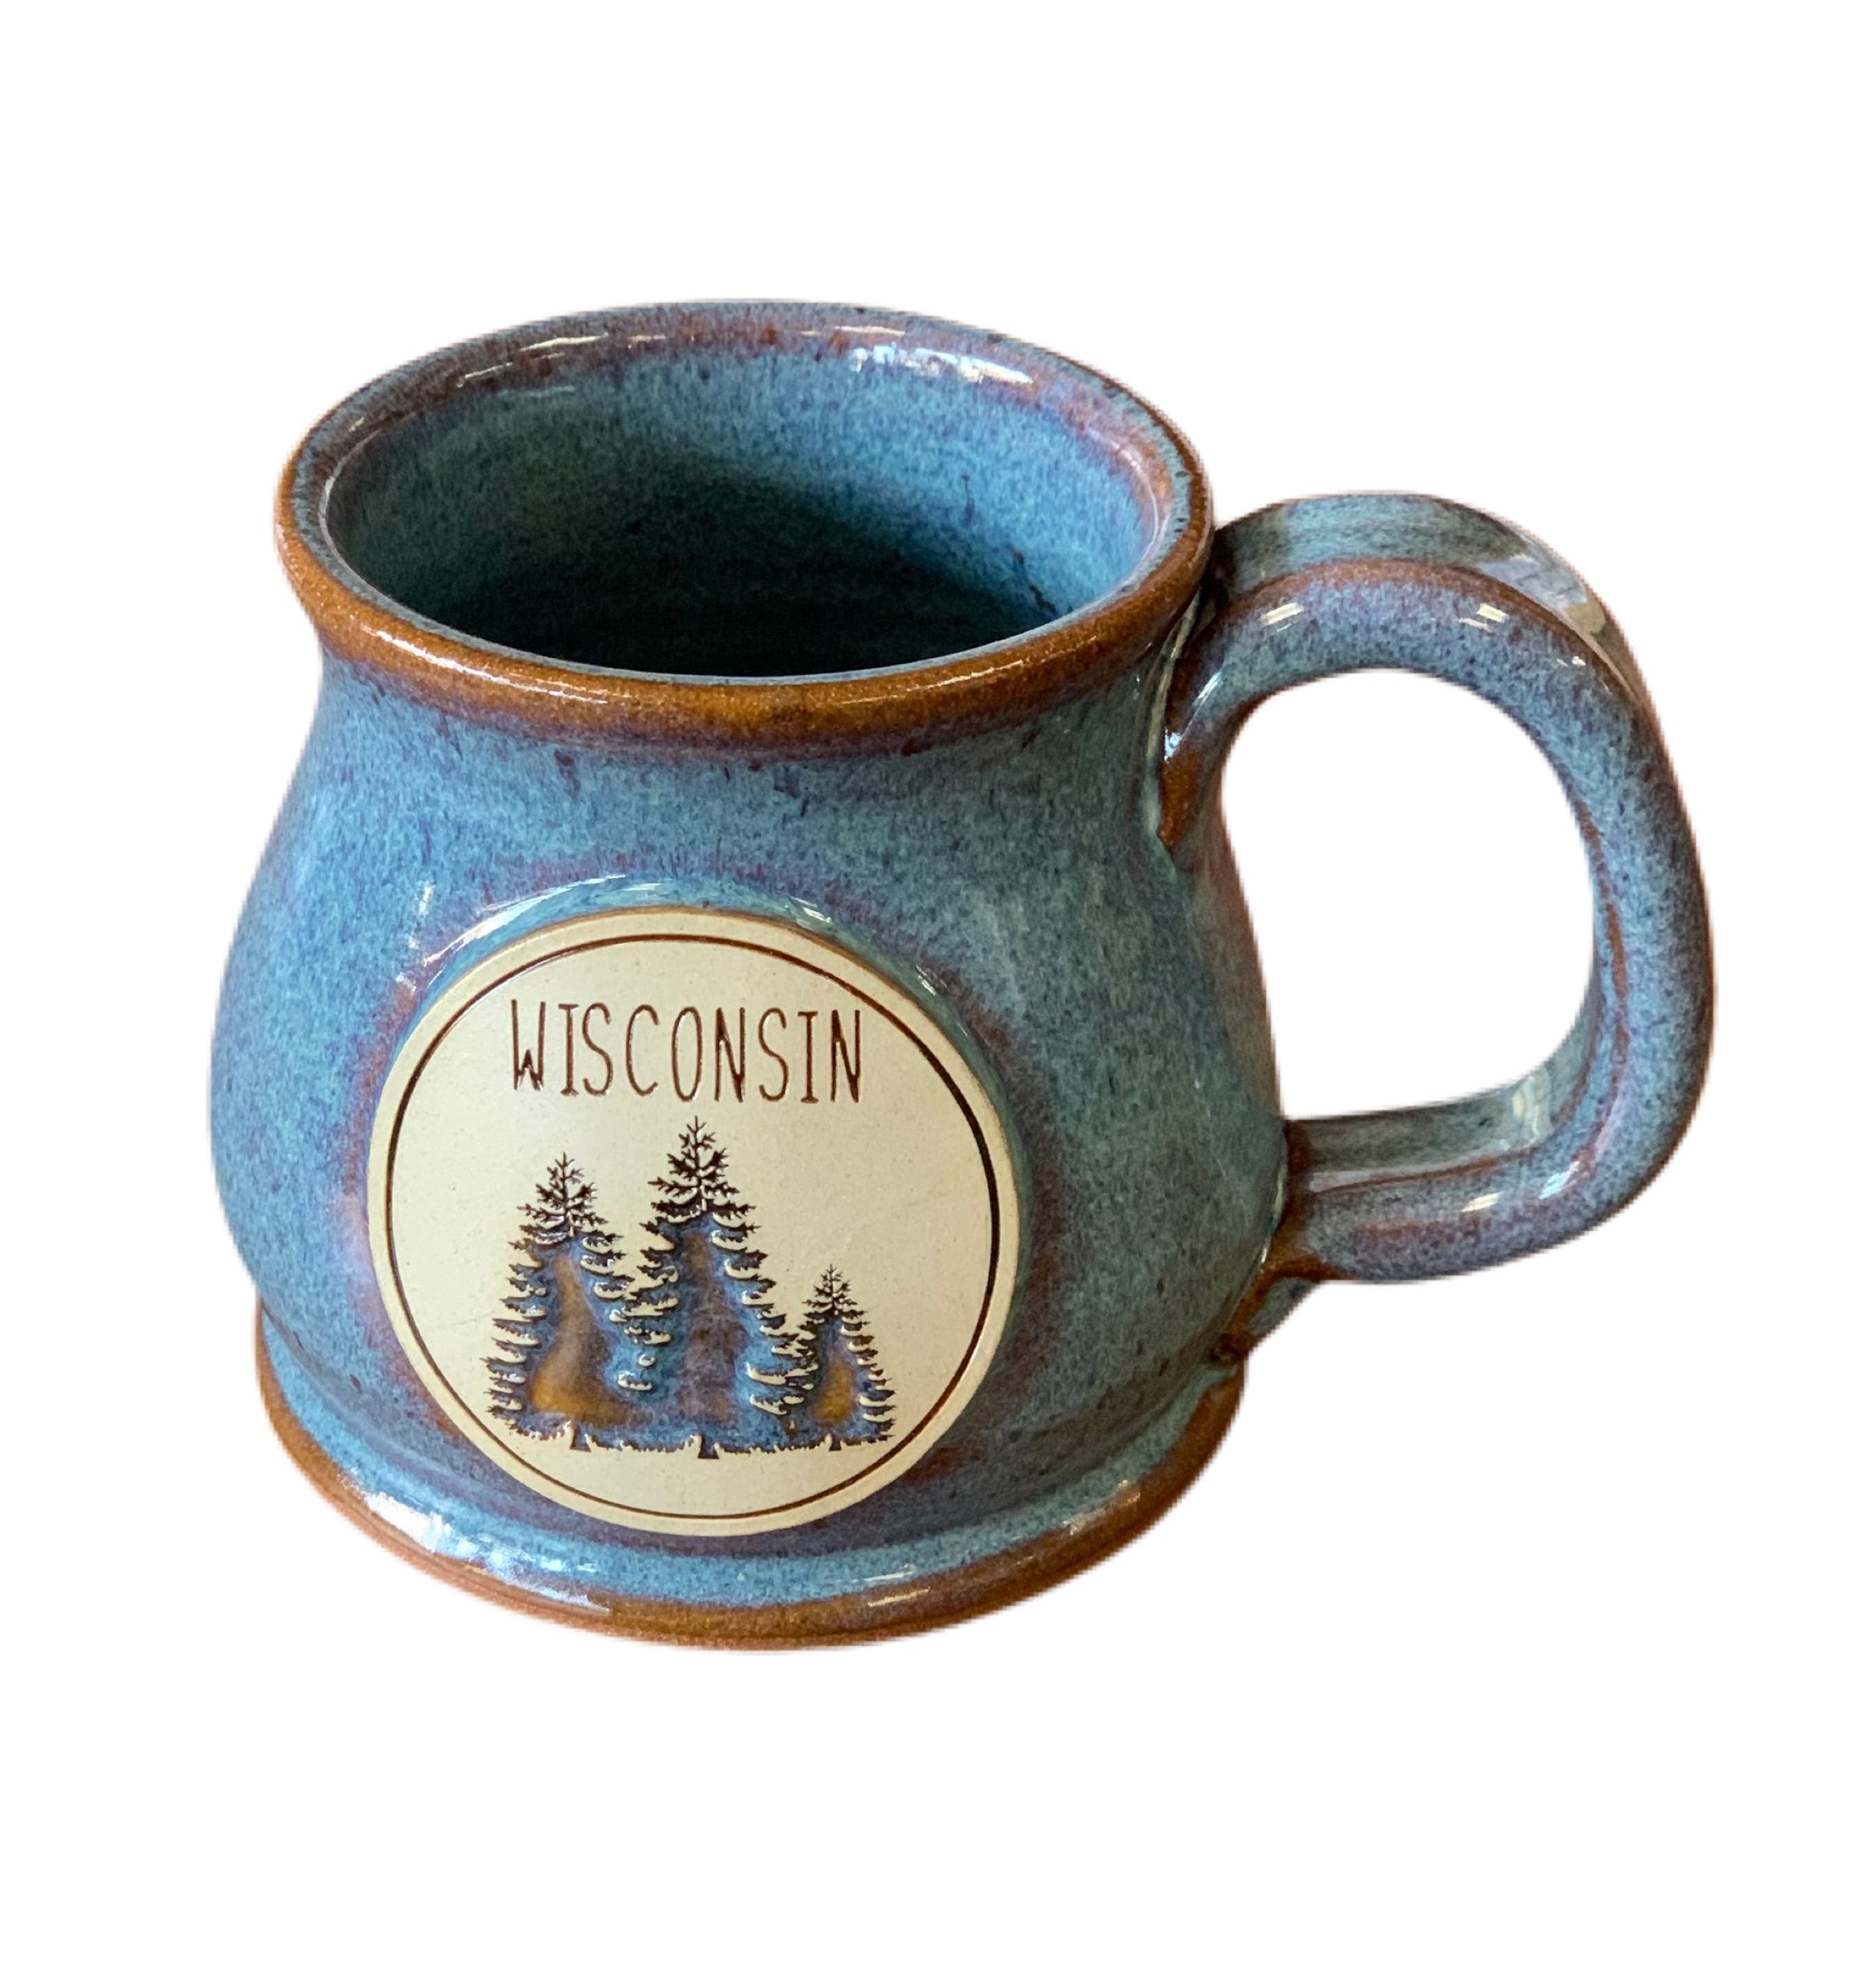 Wisconsin Stoneware Mug